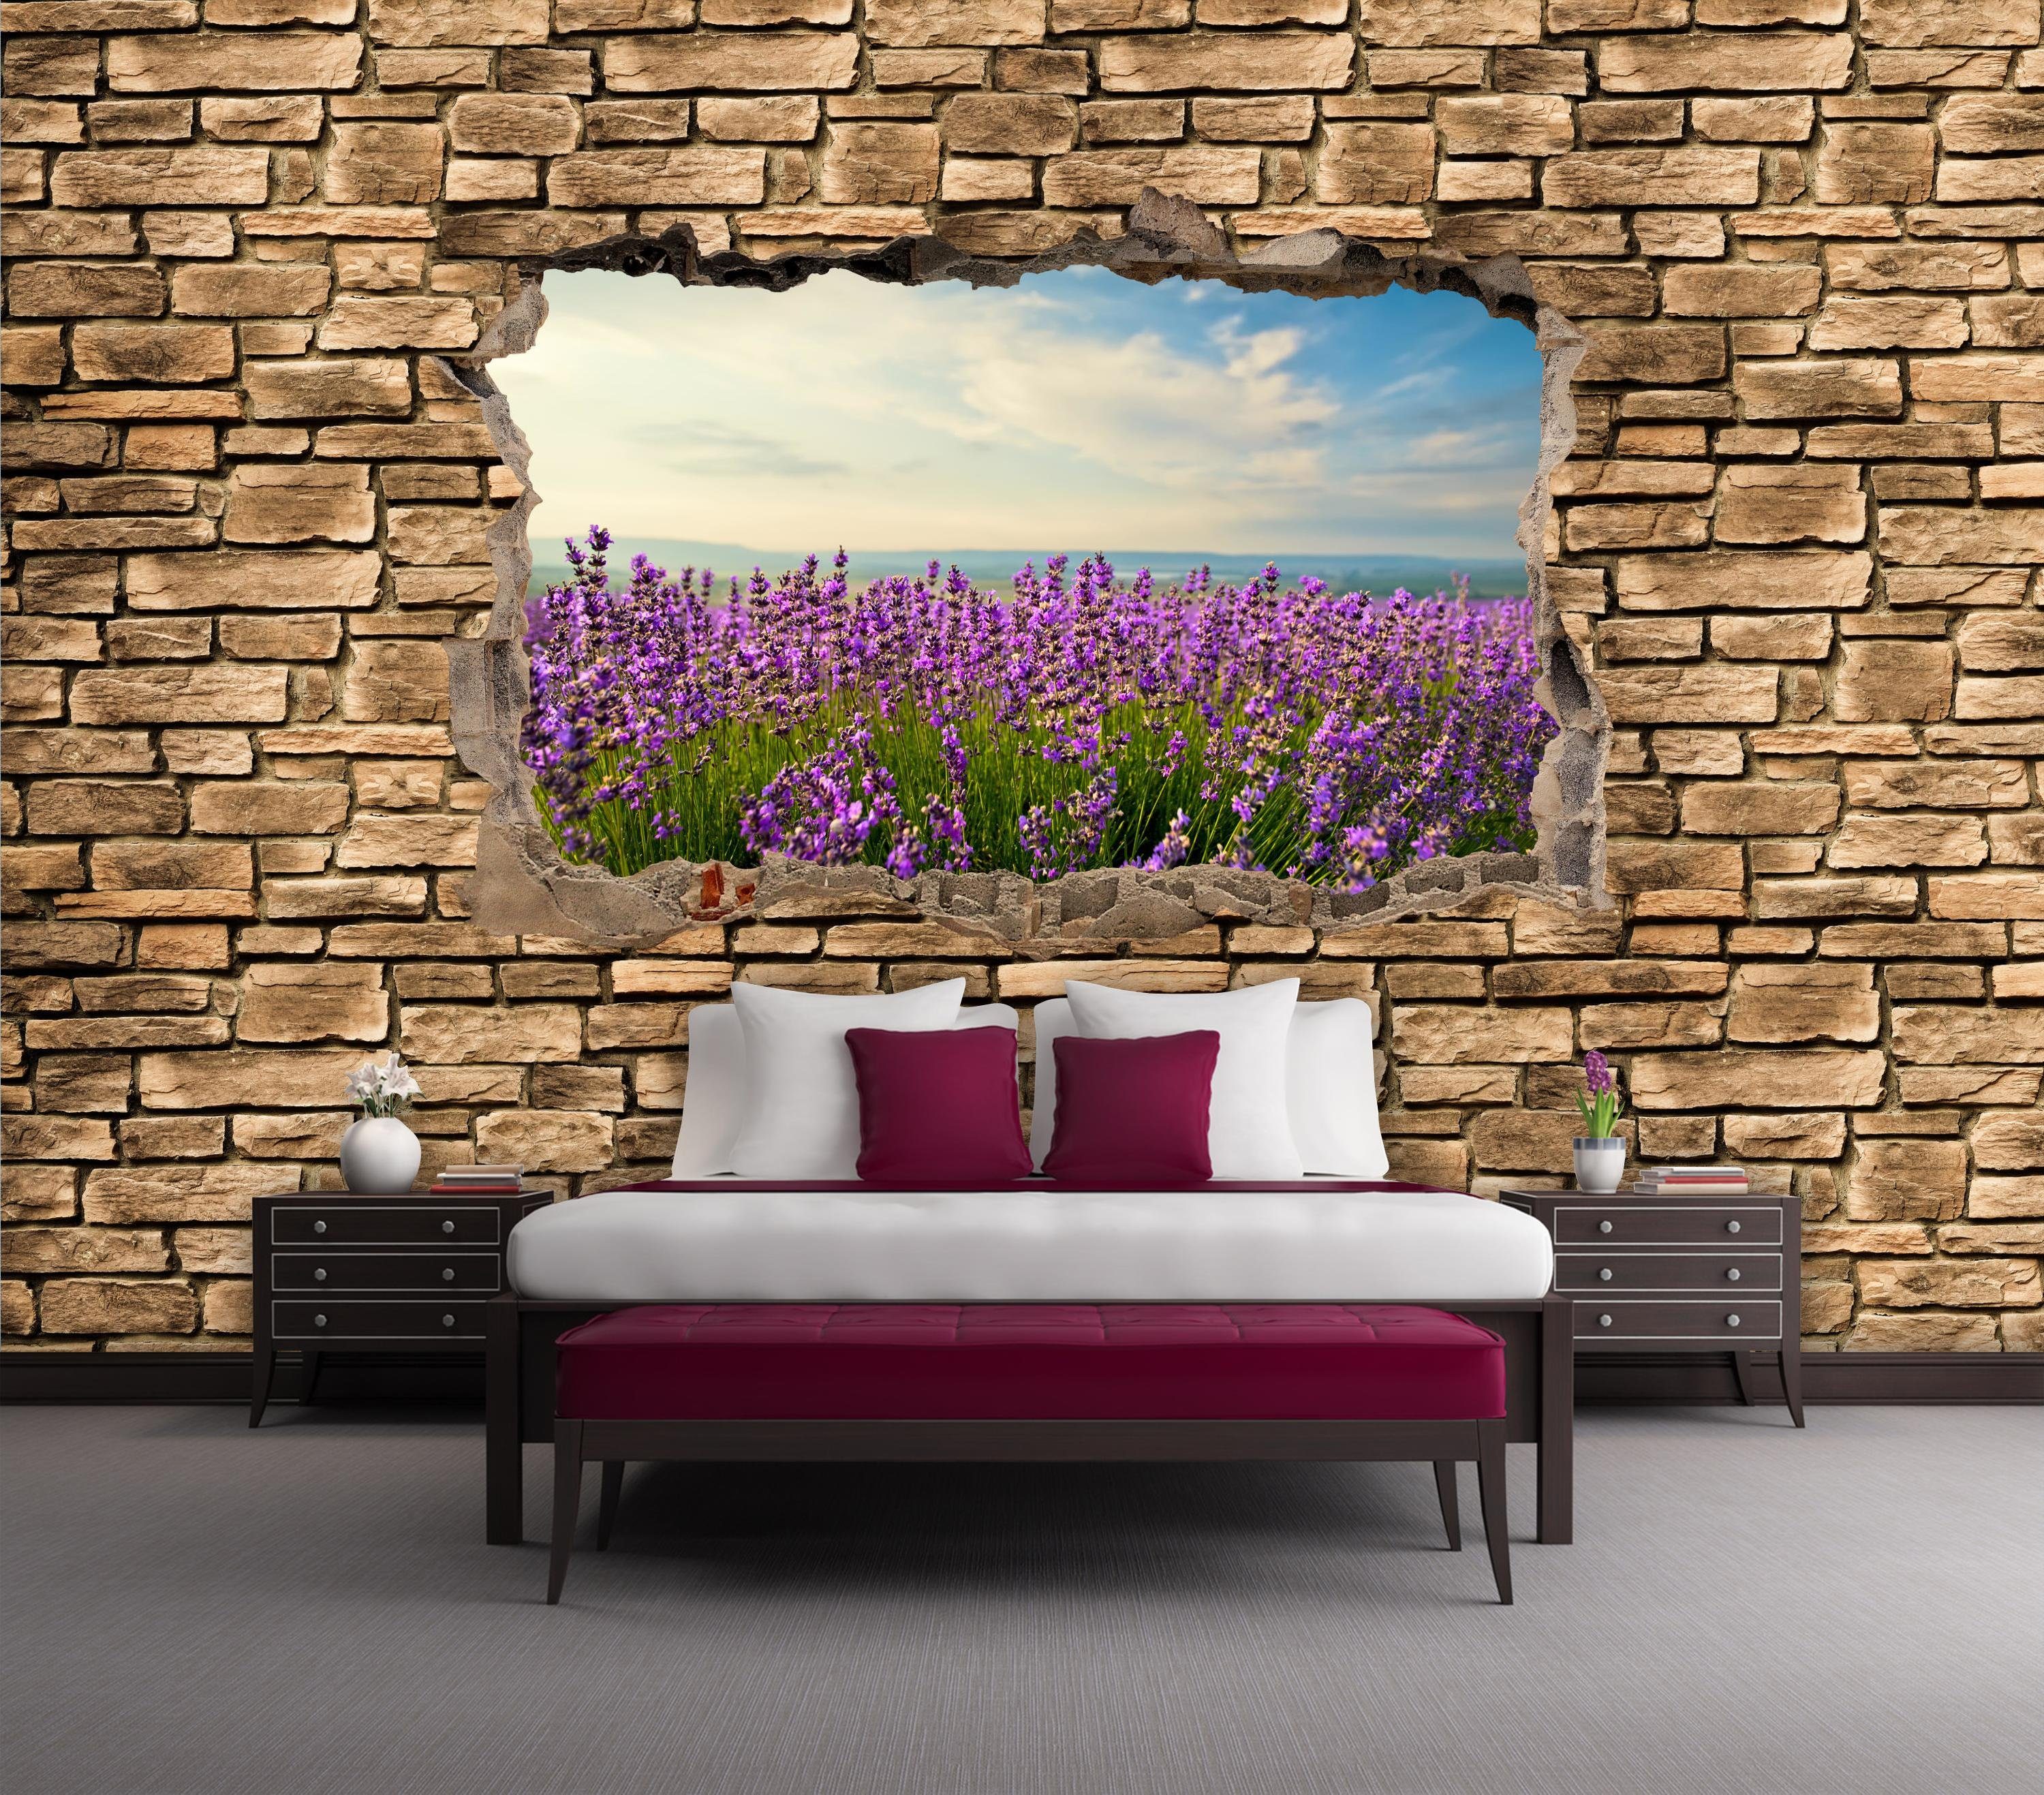 wandmotiv24 Fototapete 3D Lavendelfeld Steinmauer, Wandtapete, Vliestapete Meer matt, - Motivtapete, am glatt